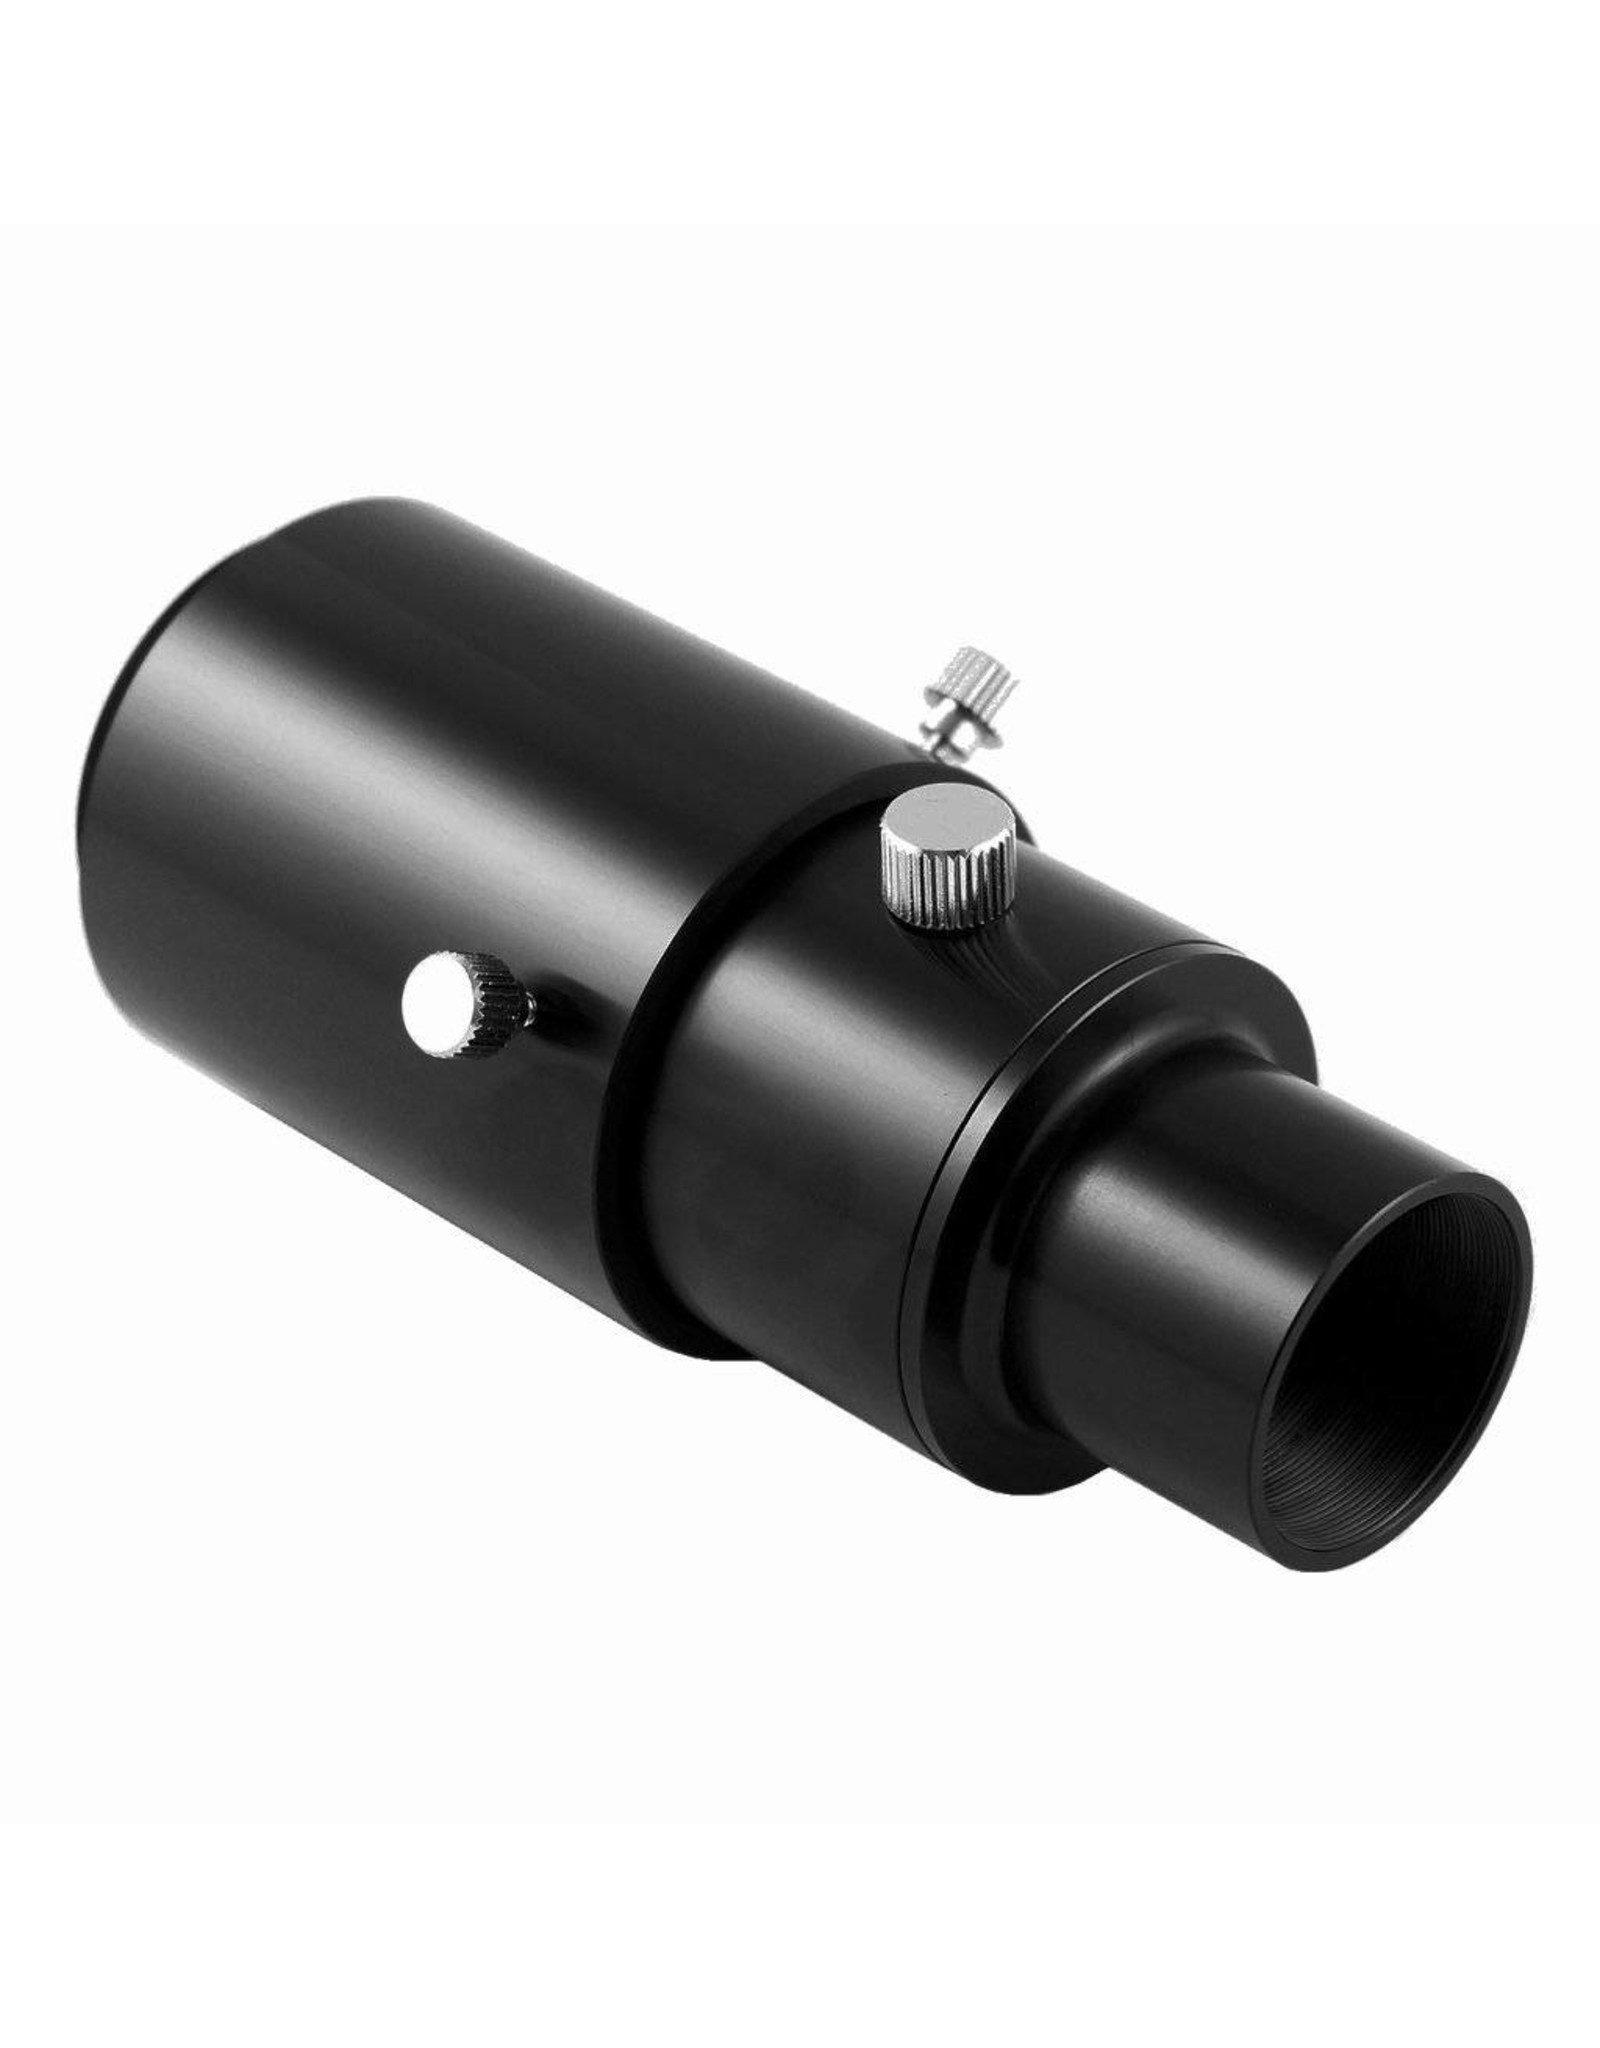 Arcturus Arcturus 1.25" Variable Eyepiece Projection Camera Adapter